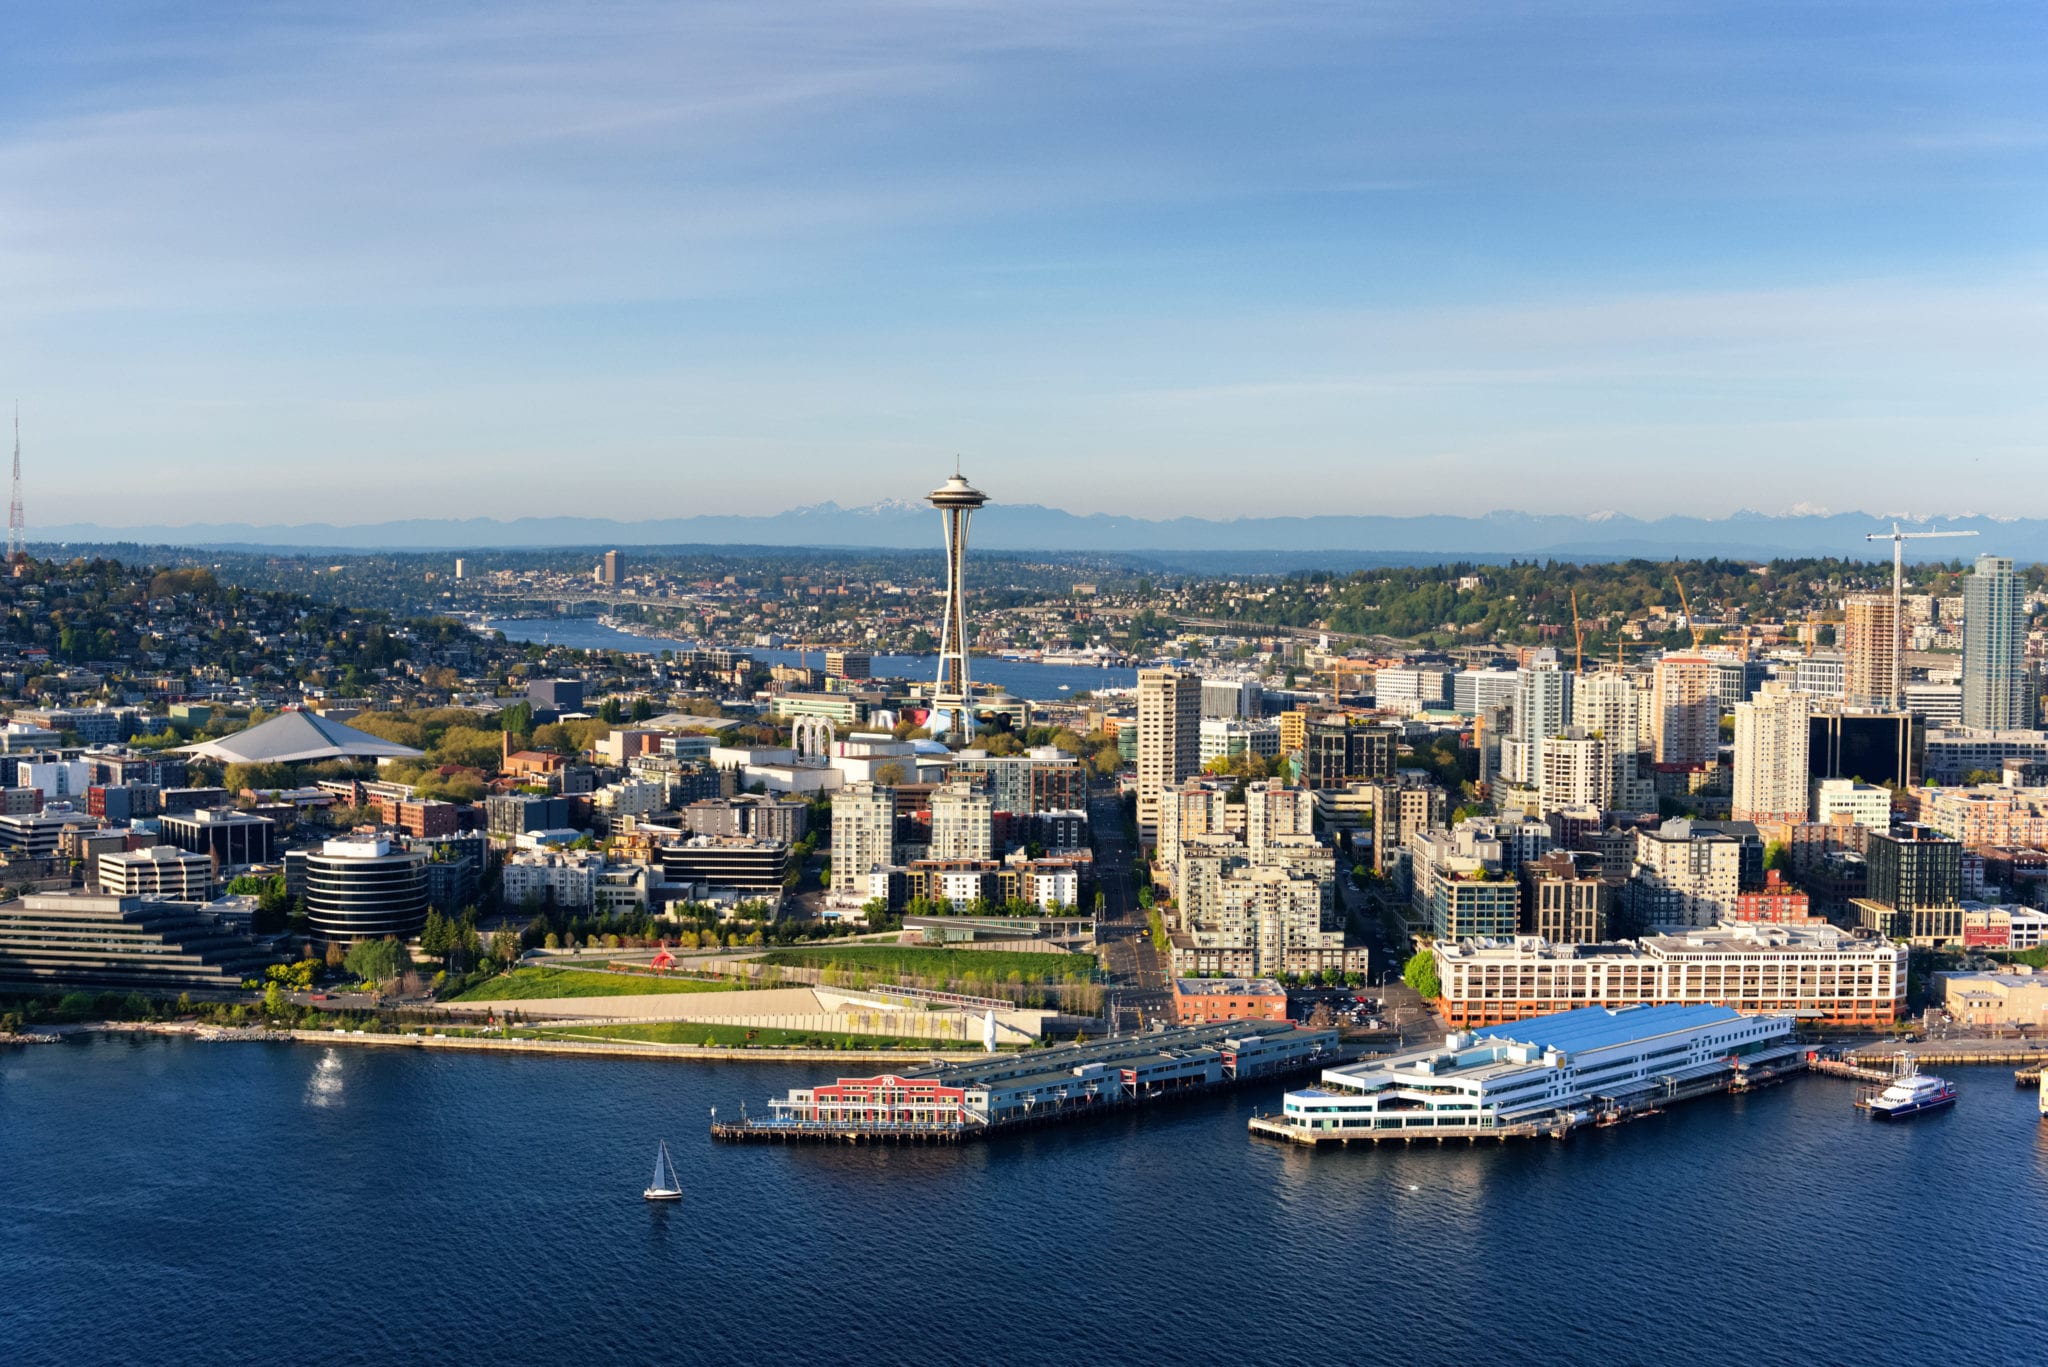 Seattle waterfront - Olympic Sculpture Park, Space Needle, Pier 70, Pier 69